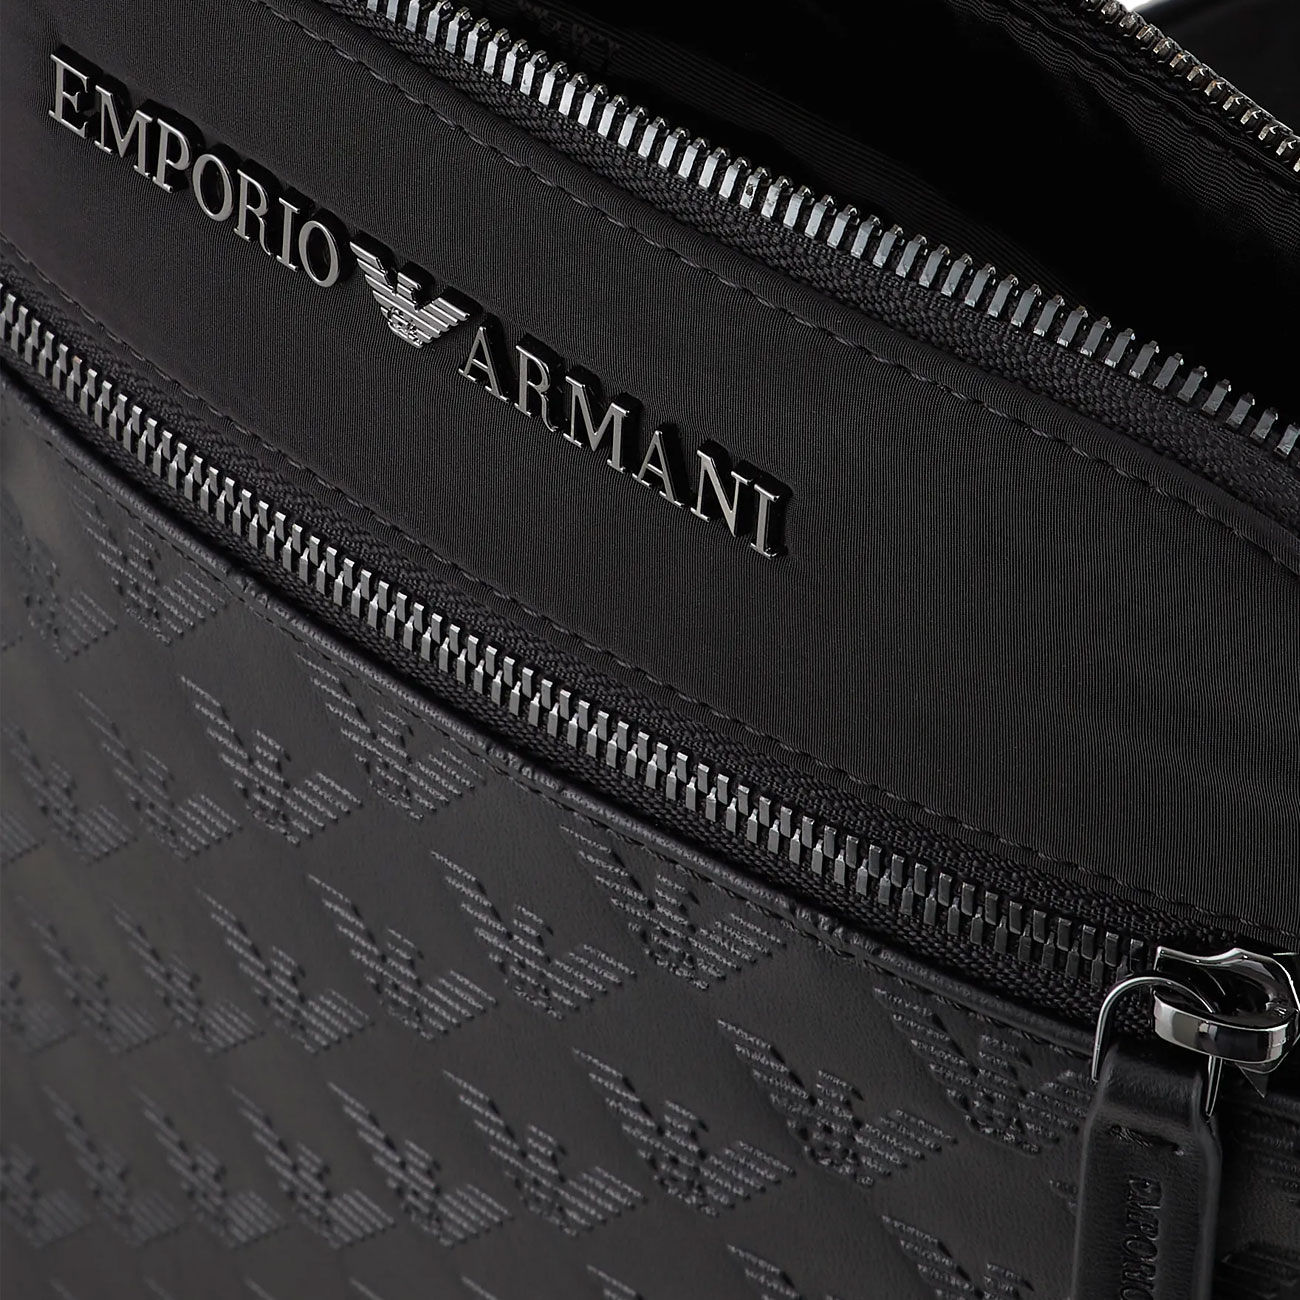 Emporio Armani Logo Messenger Bag Black